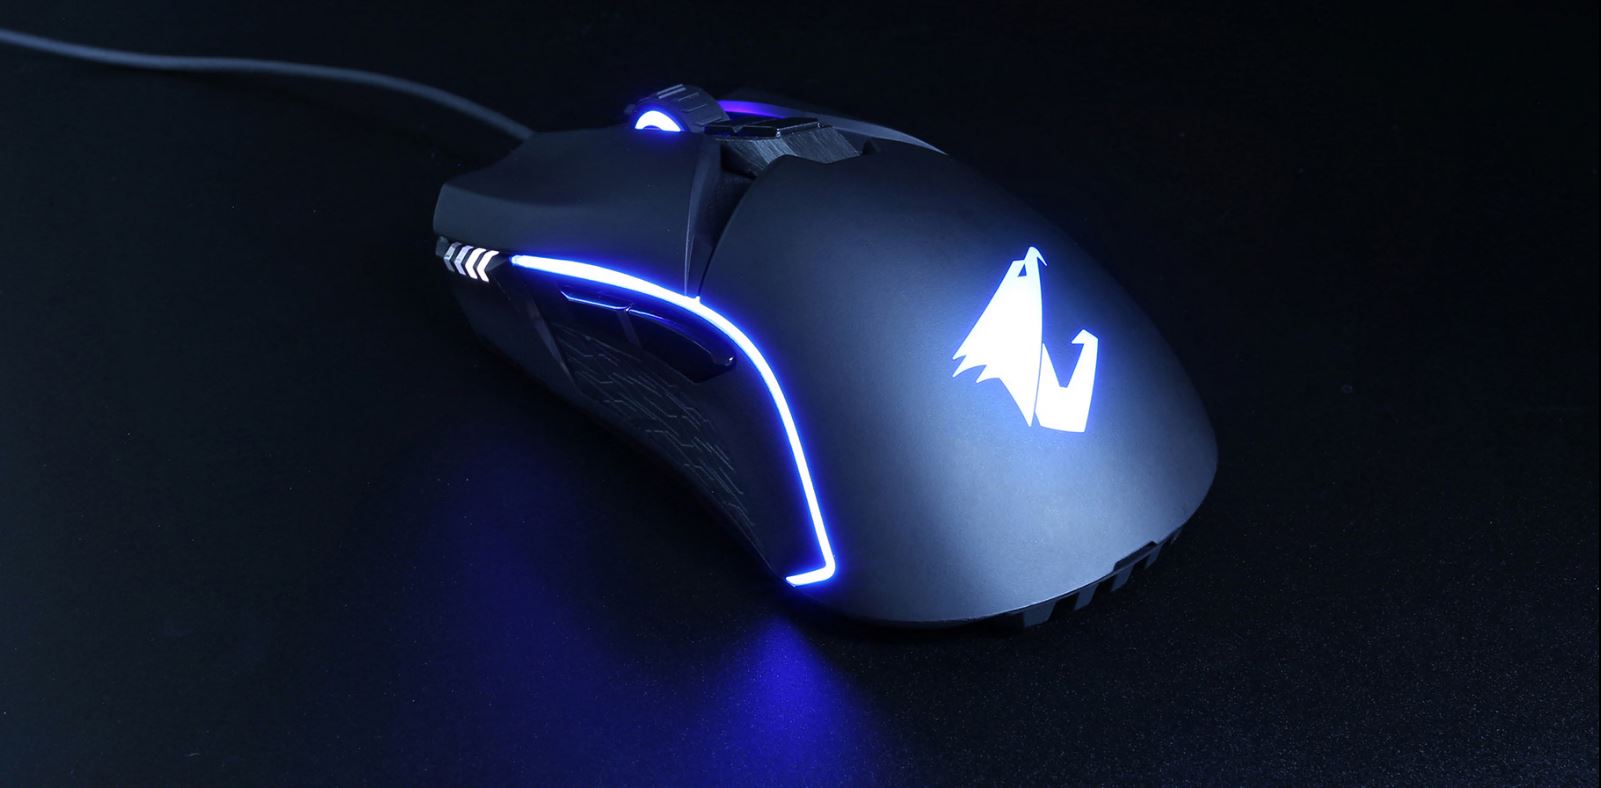 AORUS M5 Gaming Mouse